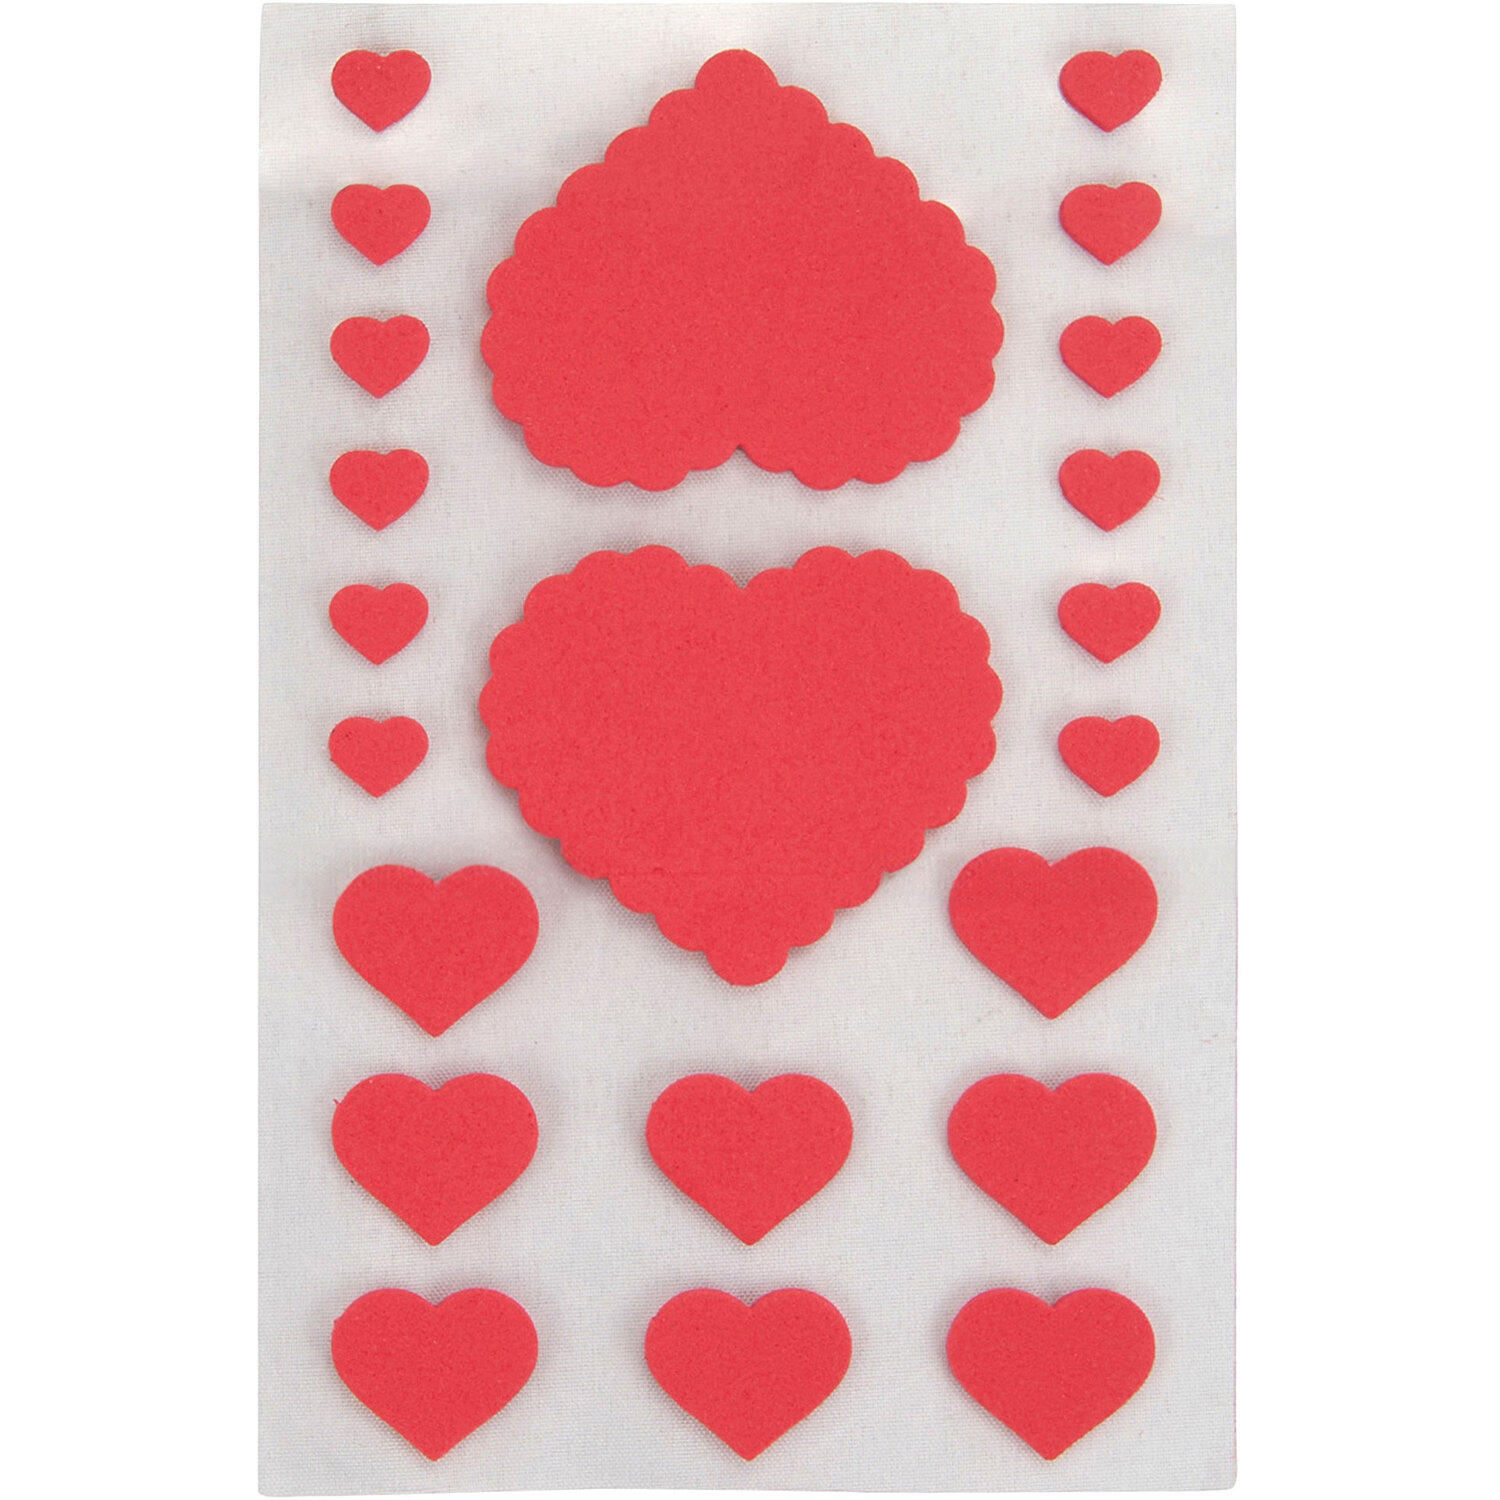 Heart Mix Match Cards Kit Image 3